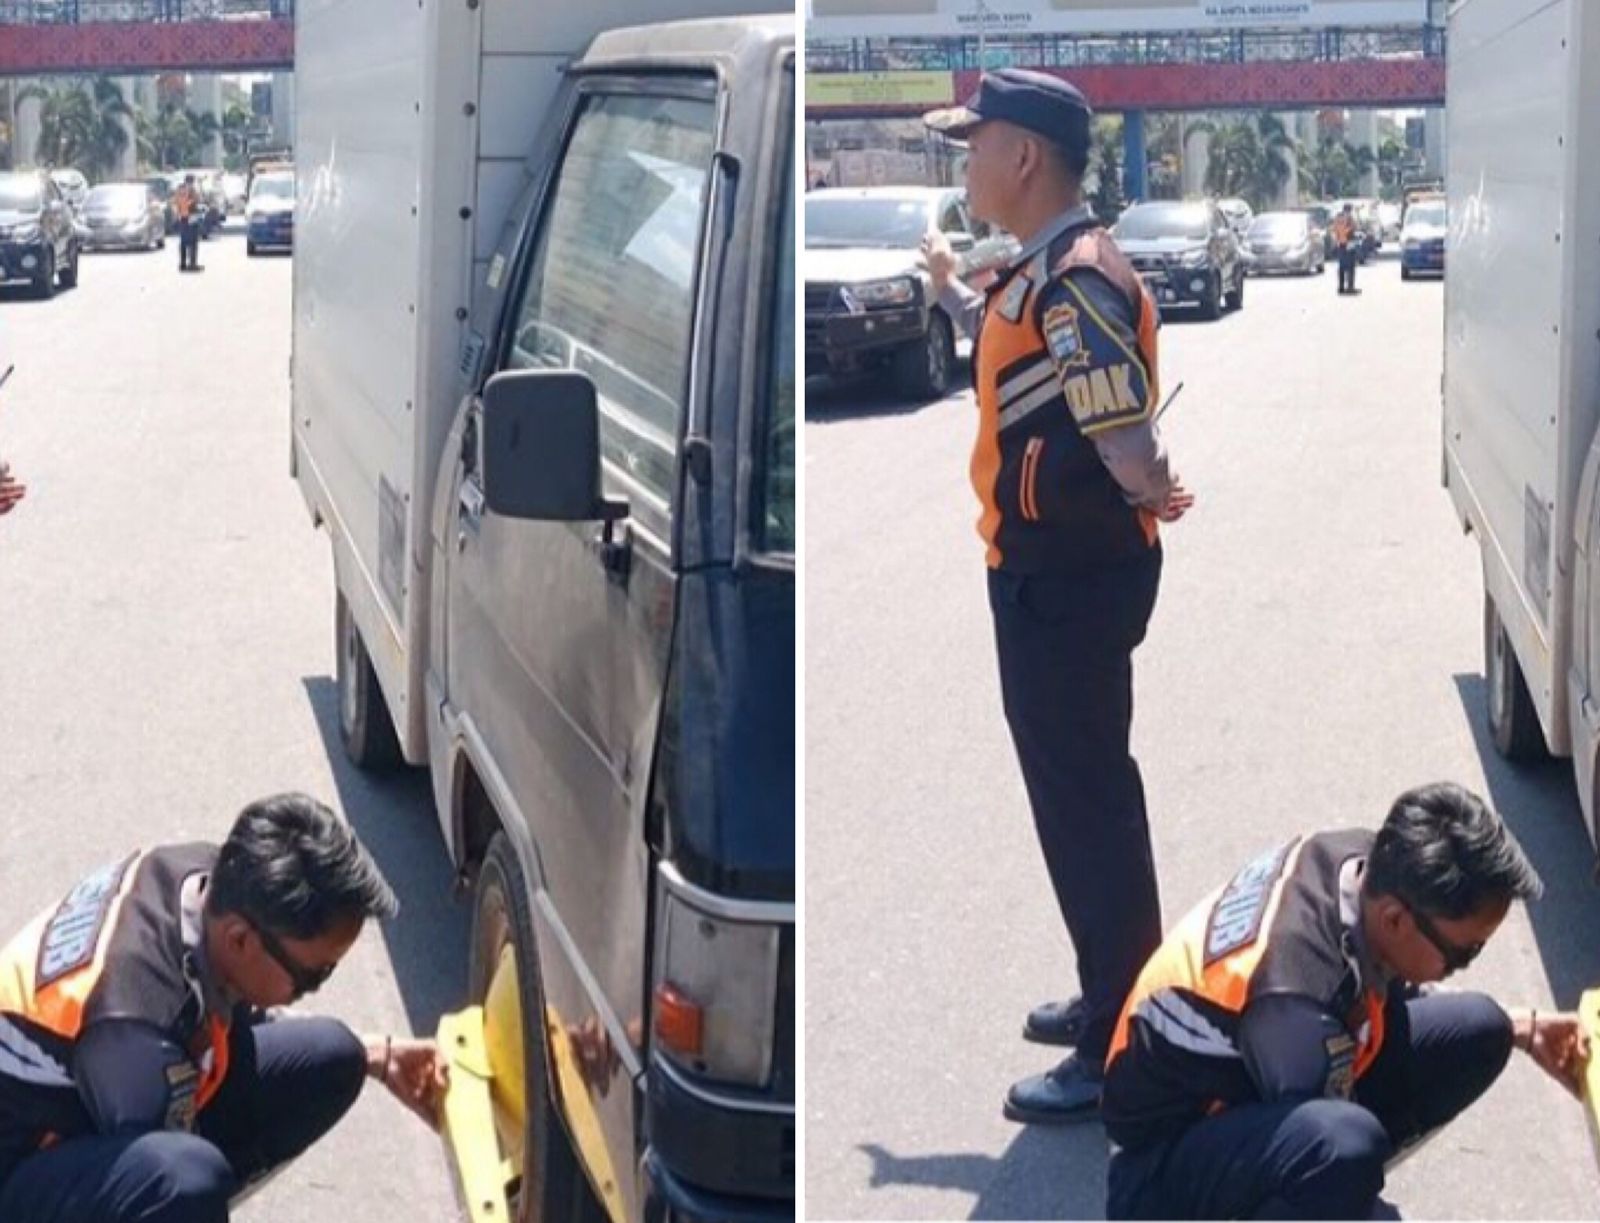 Dishub Palembang Gembok Mobil yang Parkir Sembarangan di Depan SD Muhammadiyah, Jadi Efek Jera?